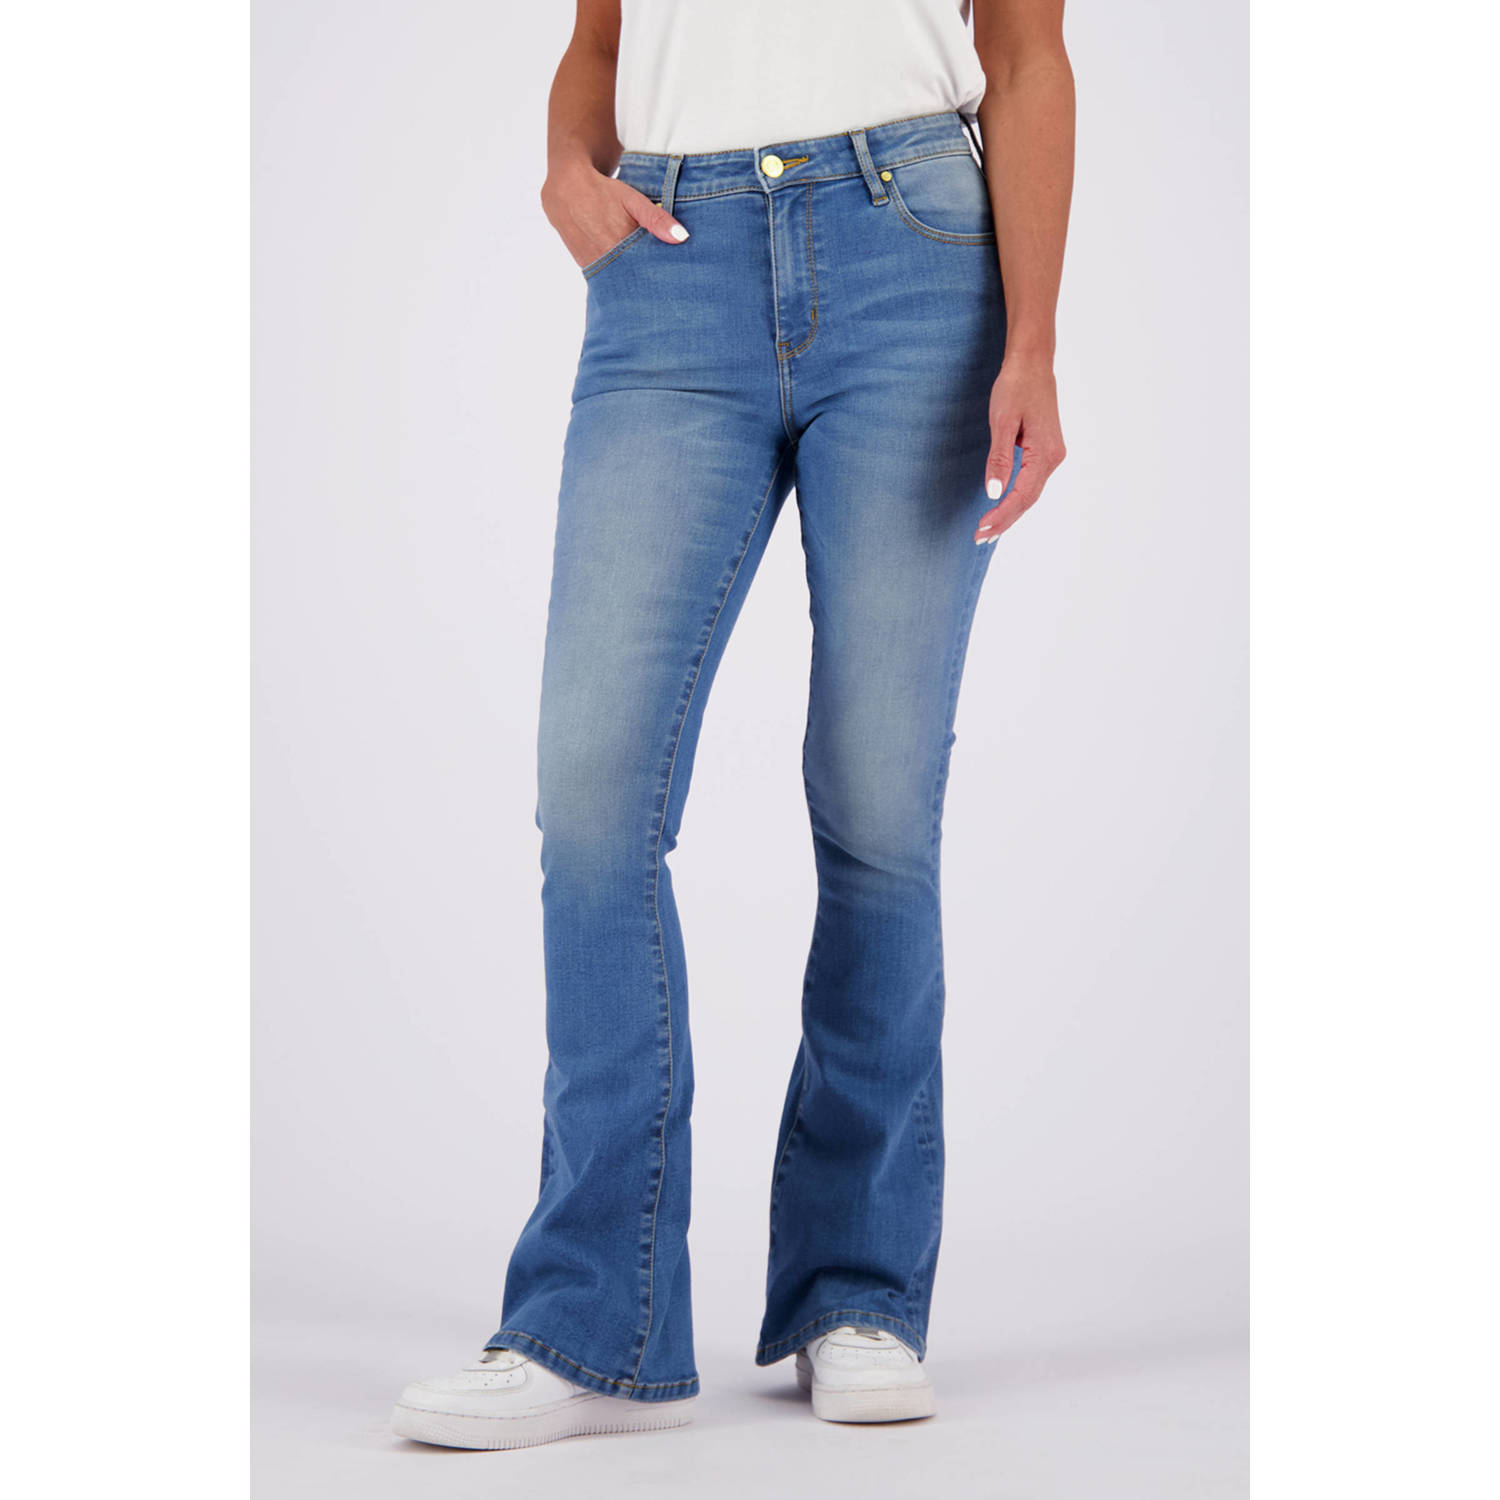 Raizzed high waist flared jeans Sunrise light blue denim